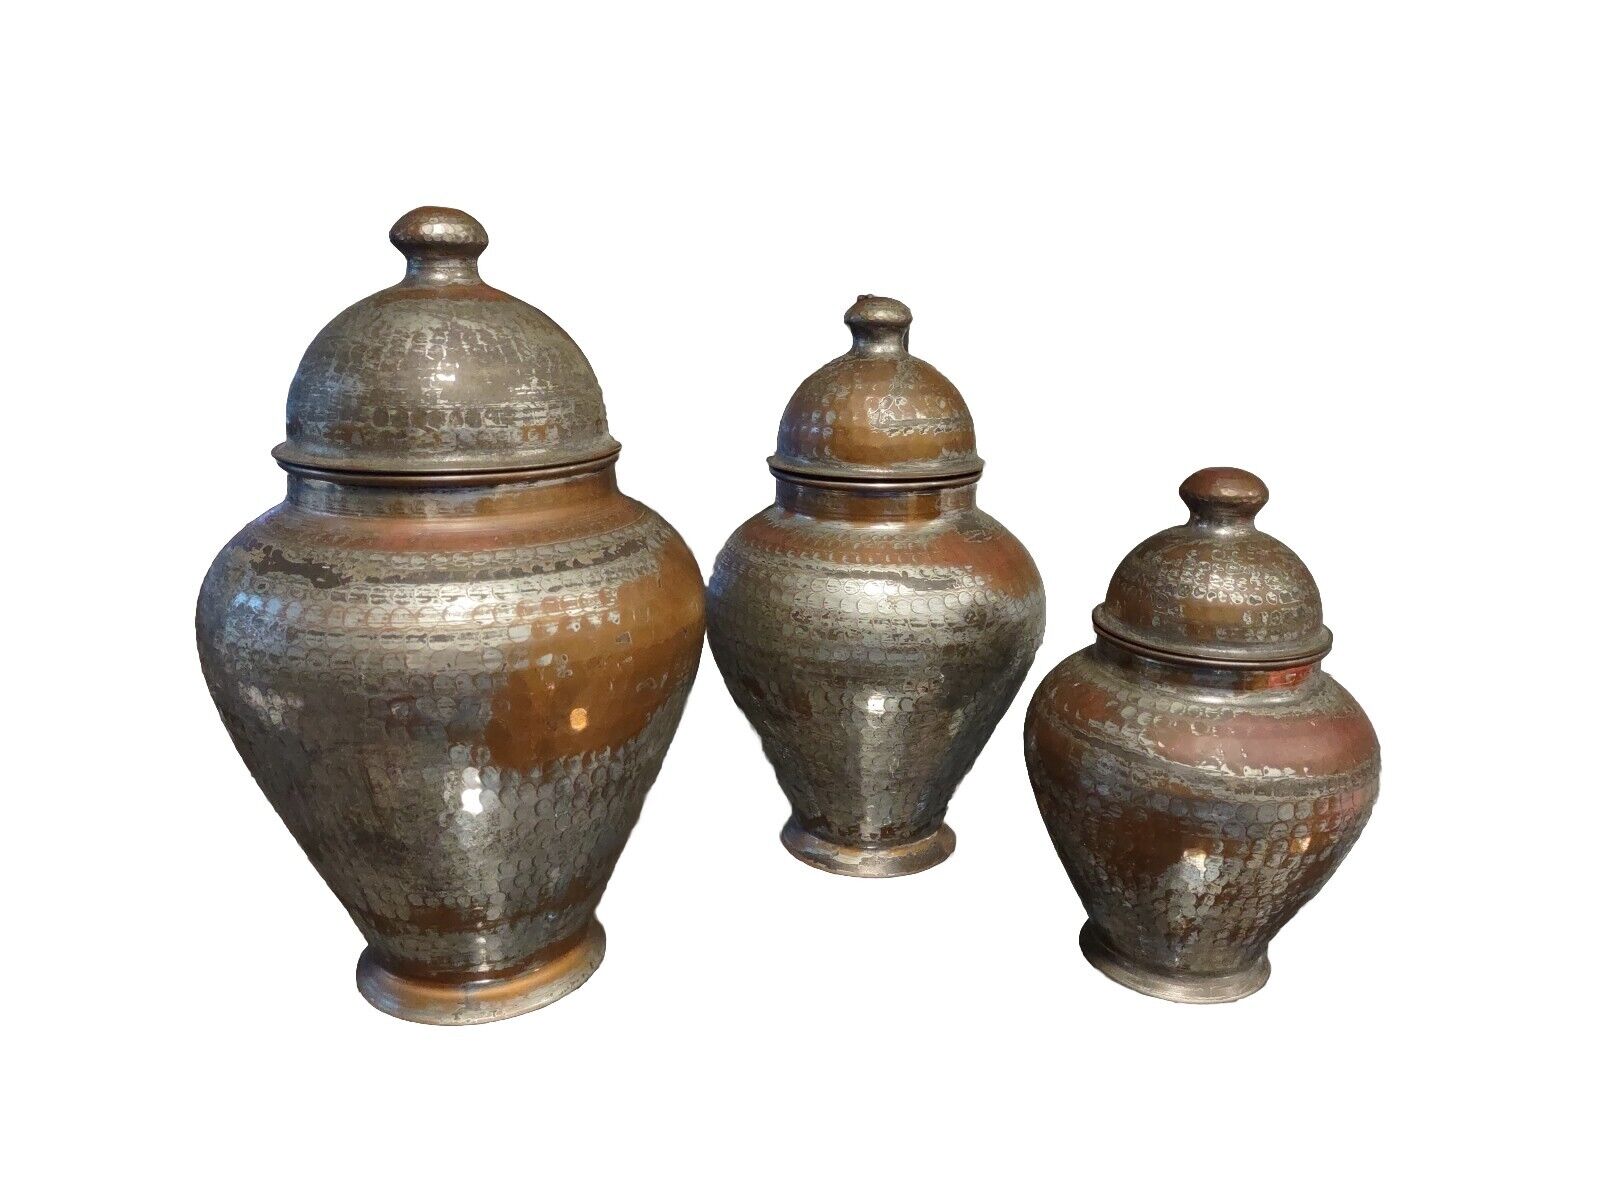 Unique Ottoman Treasures 3 Handmade Hammered Copper w/Silver Overlay Turkish Urn